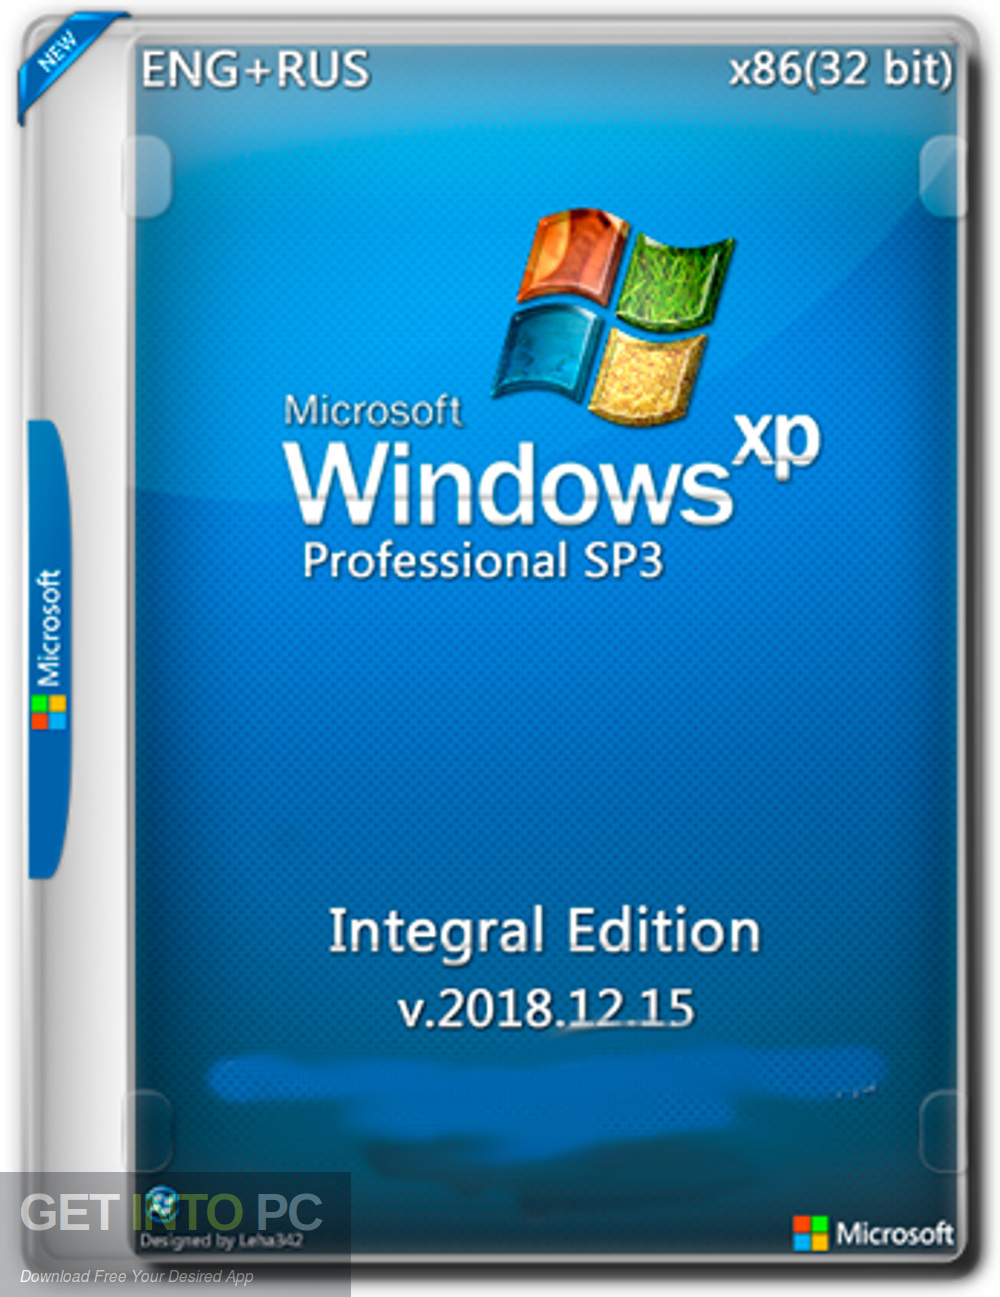 Windows XP Professional SP3 Jan 2019 Free DOwnload GetintoPC.com